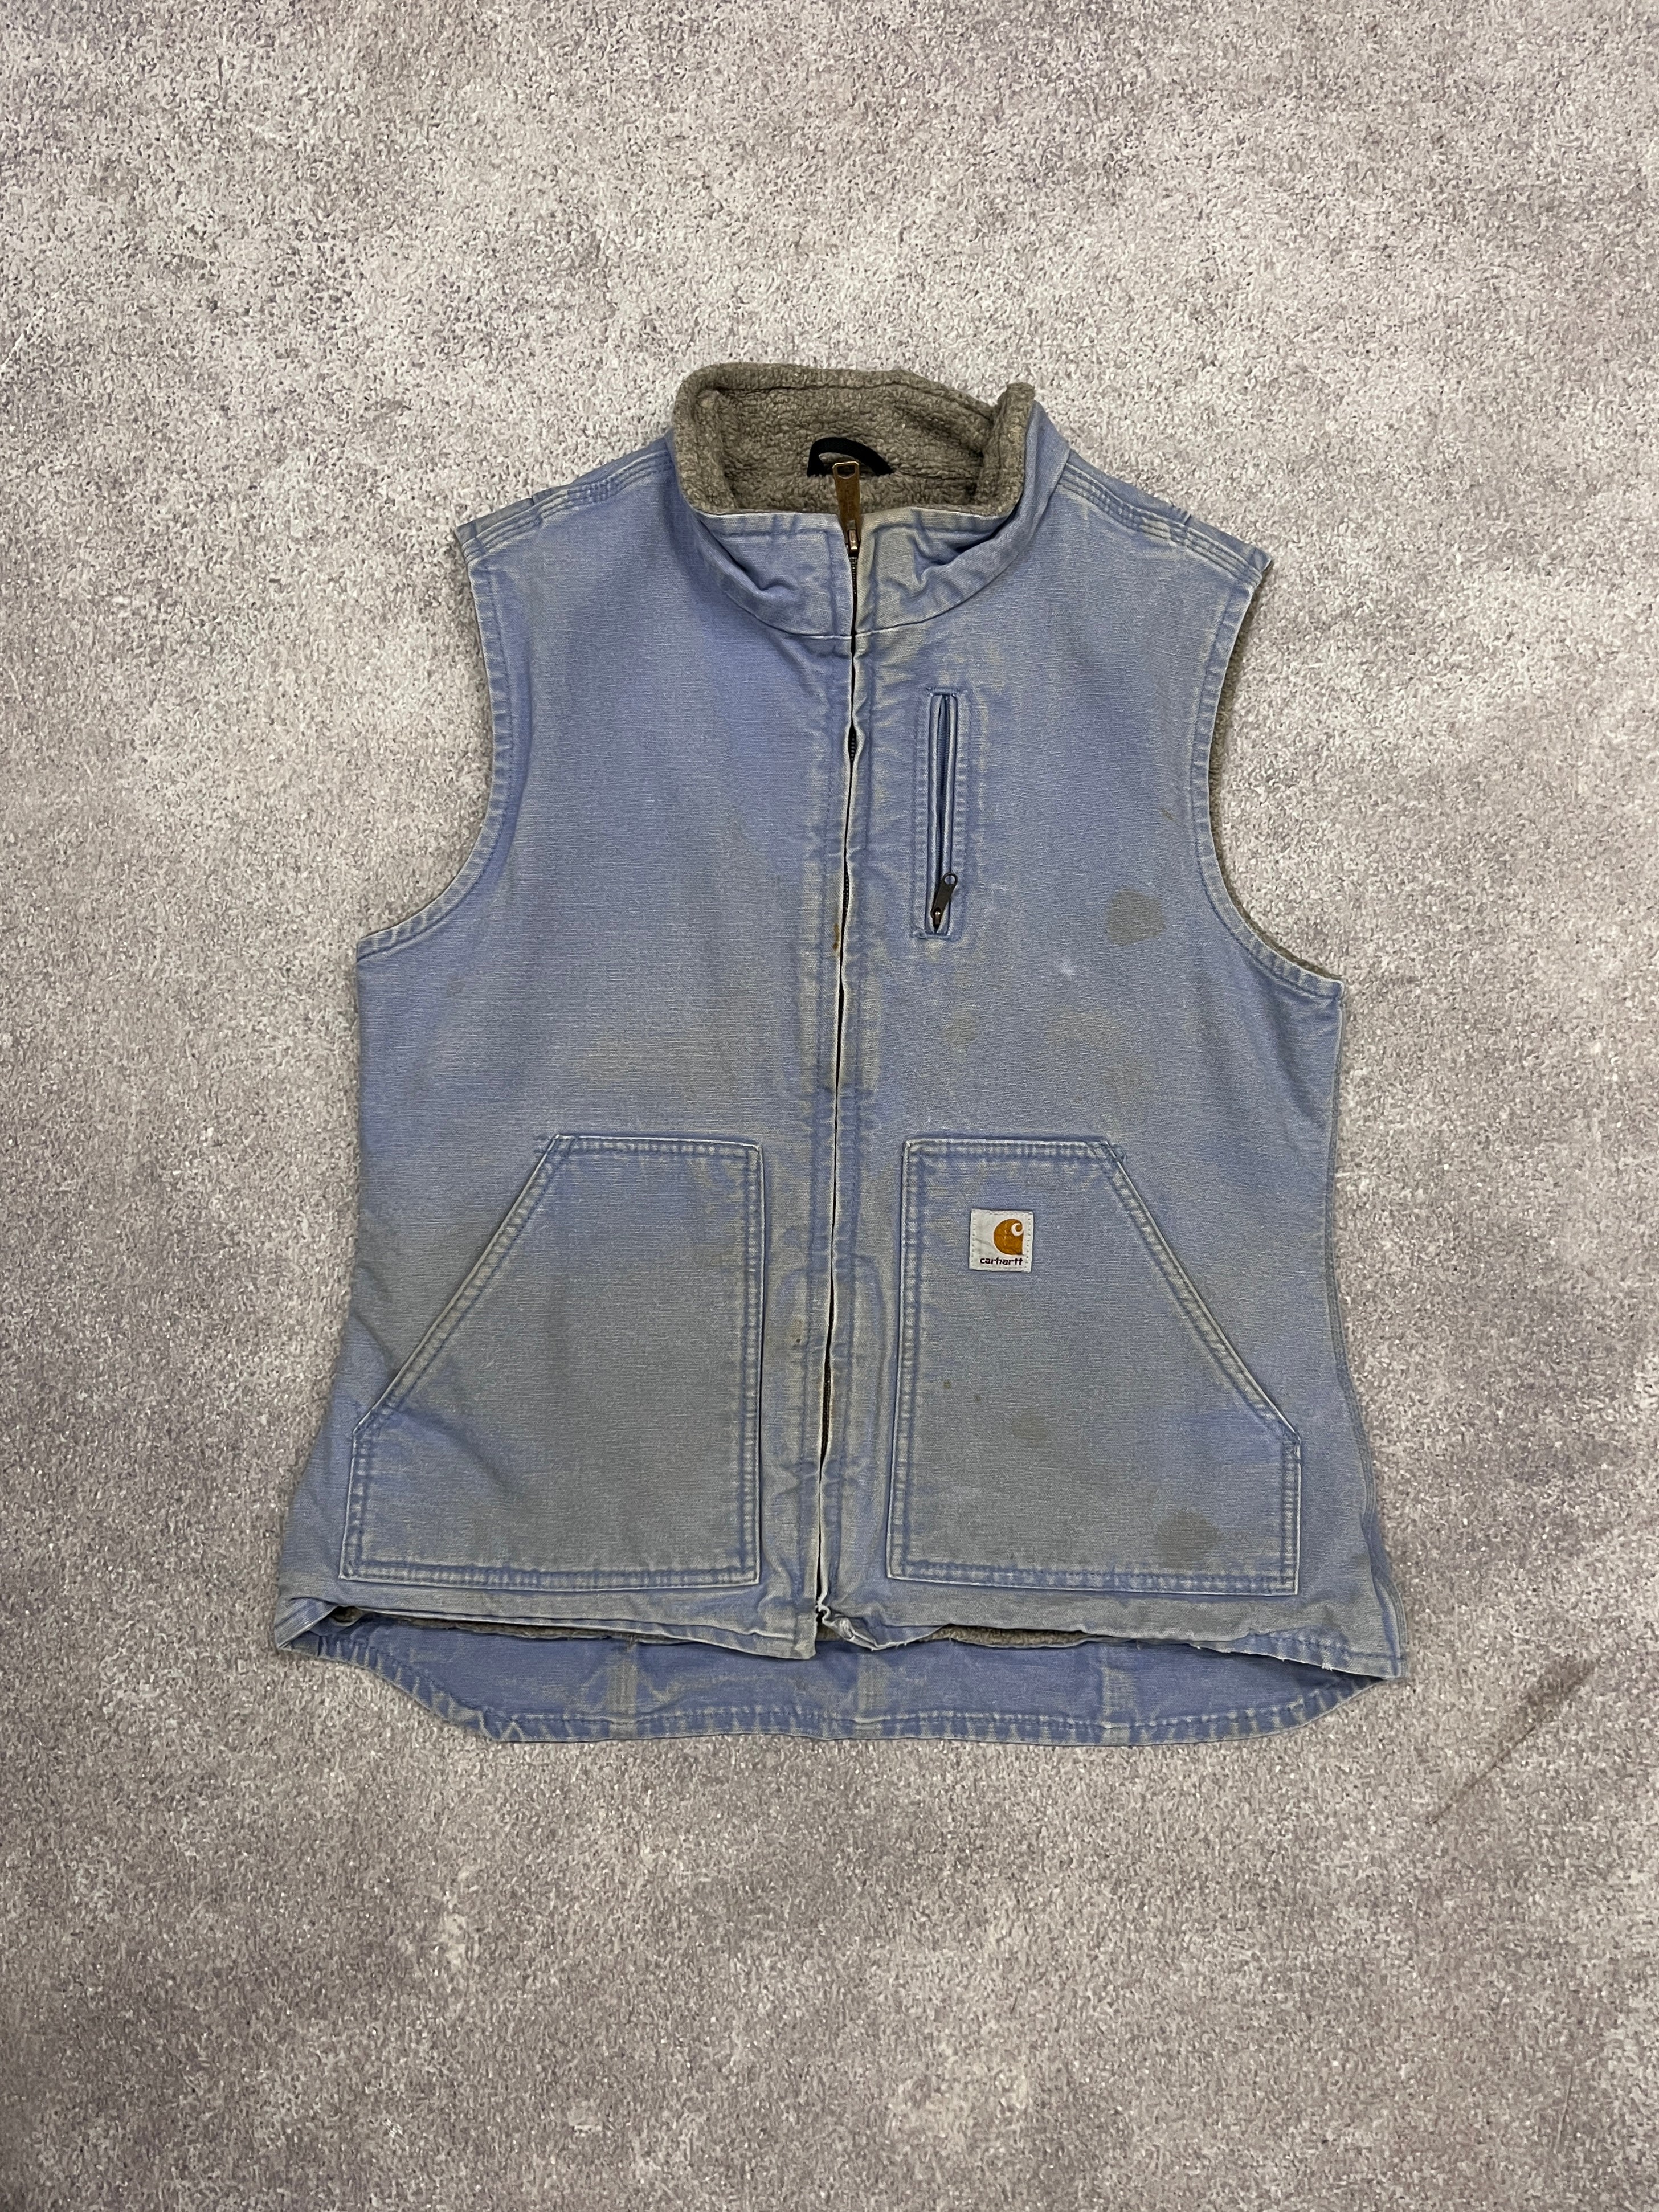 Vintage Carhartt Workwear Vest Blue // Small - RHAGHOUSE VINTAGE